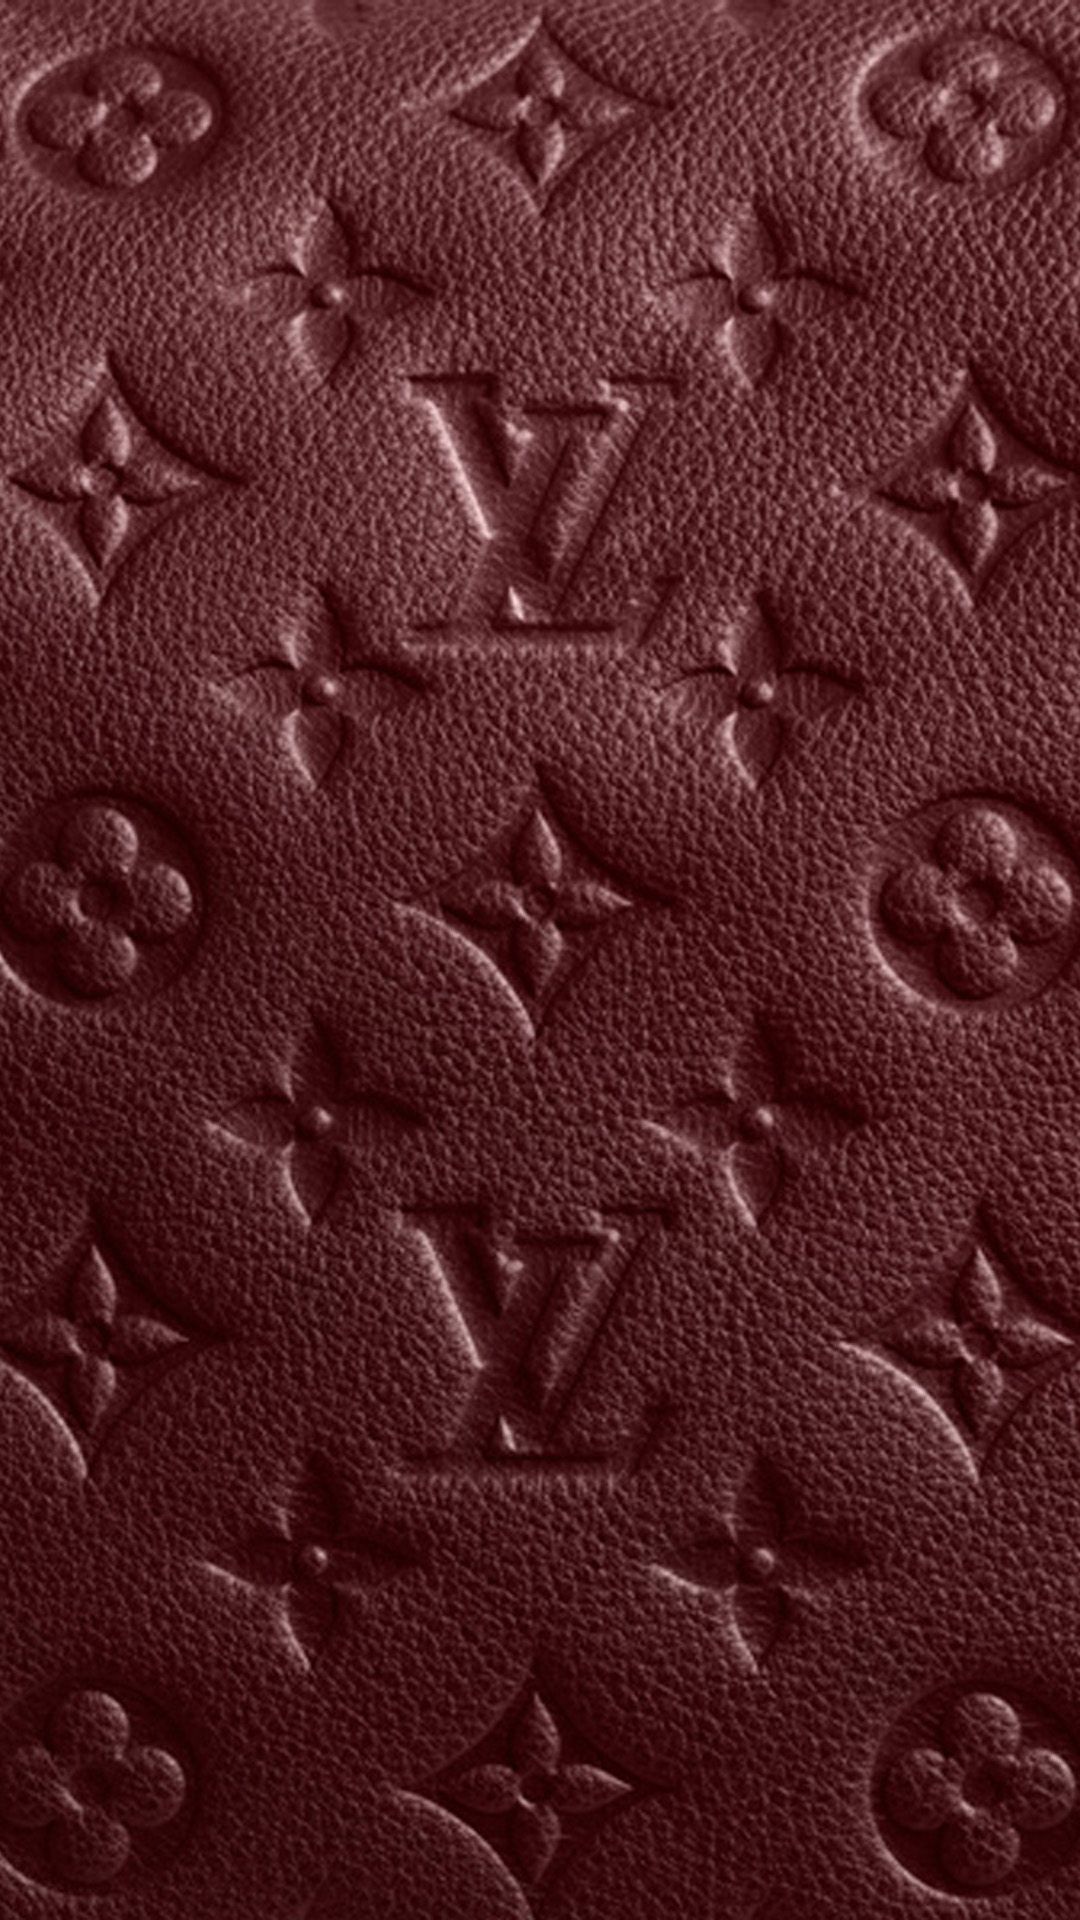 burgundy.quenalbertini: Louis Vuitton Monogram iPhone Fondos de pantalla